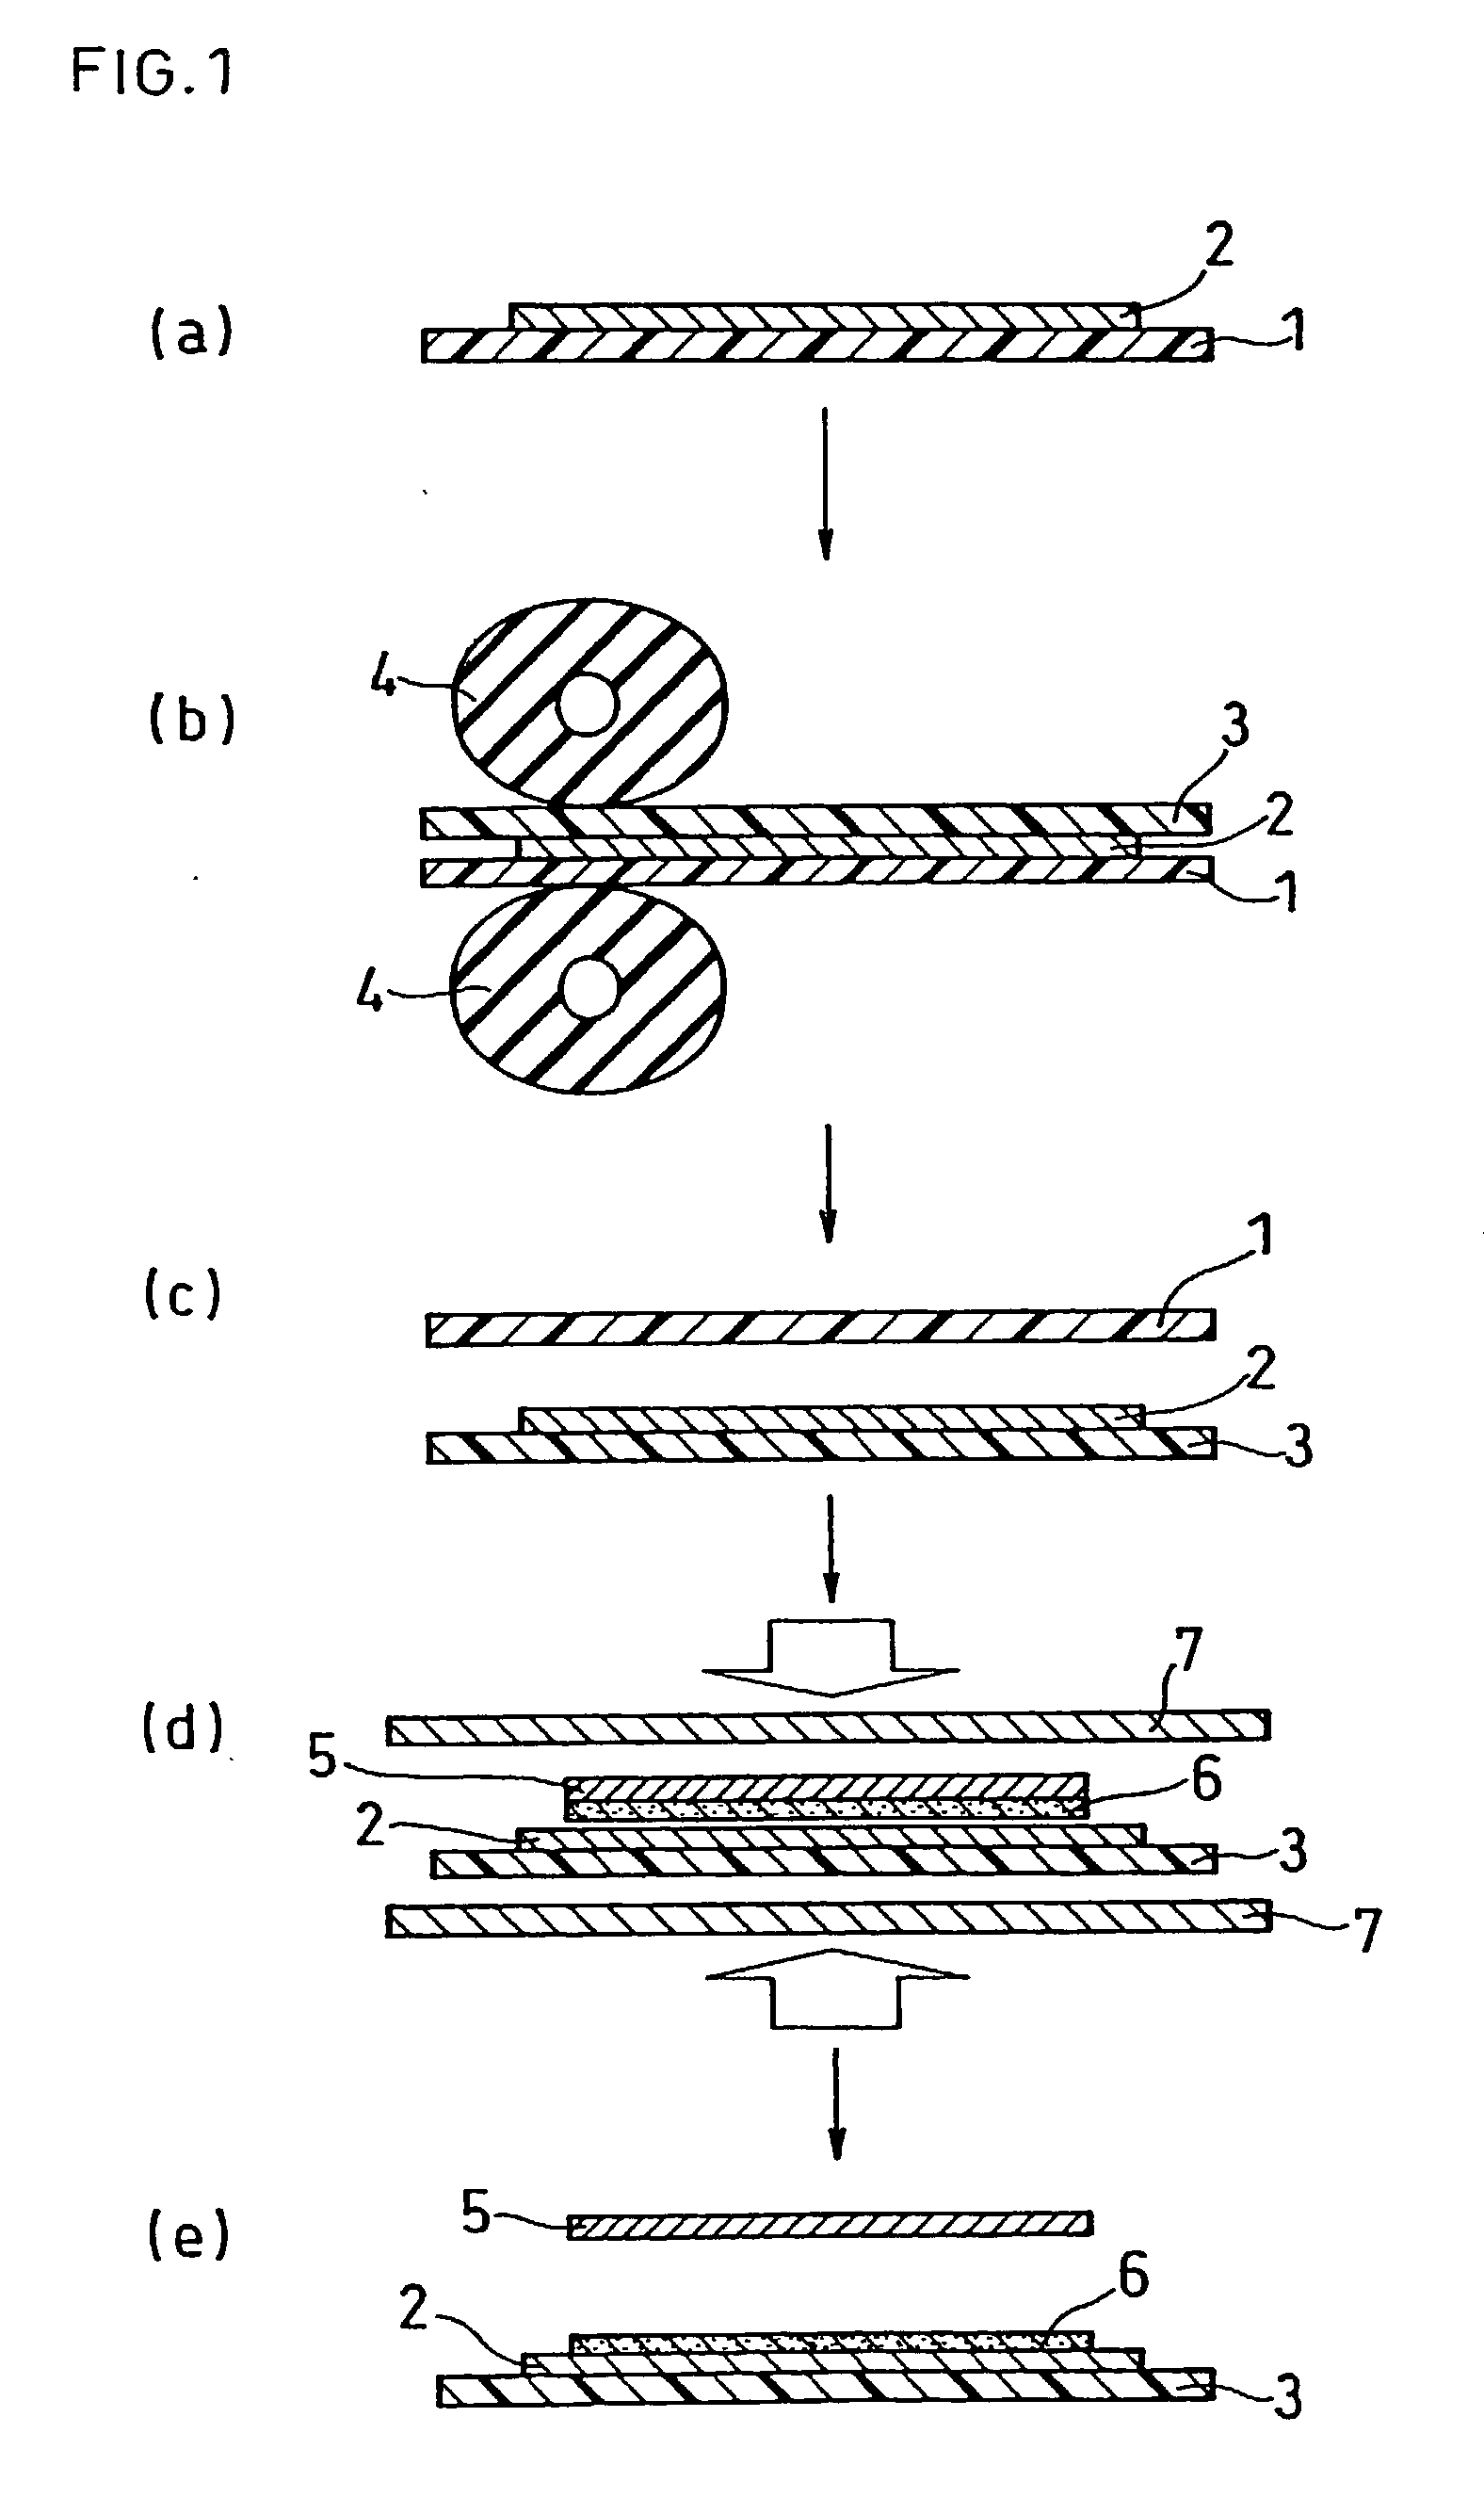 Method for manufacturing fuel cell elecrolyte film-electrode bond